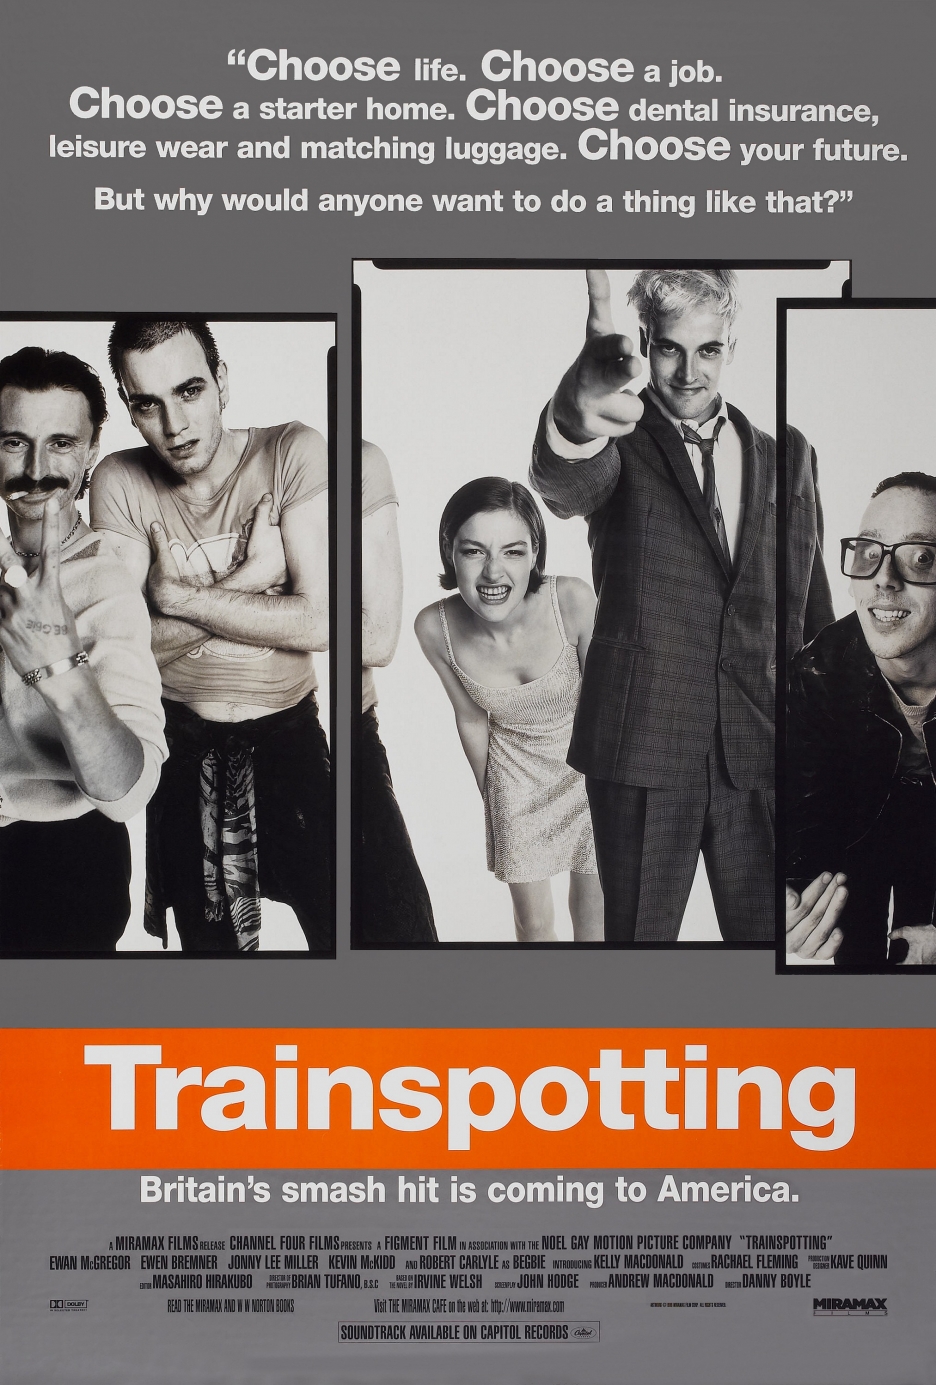 Trainspotting movie poster 1